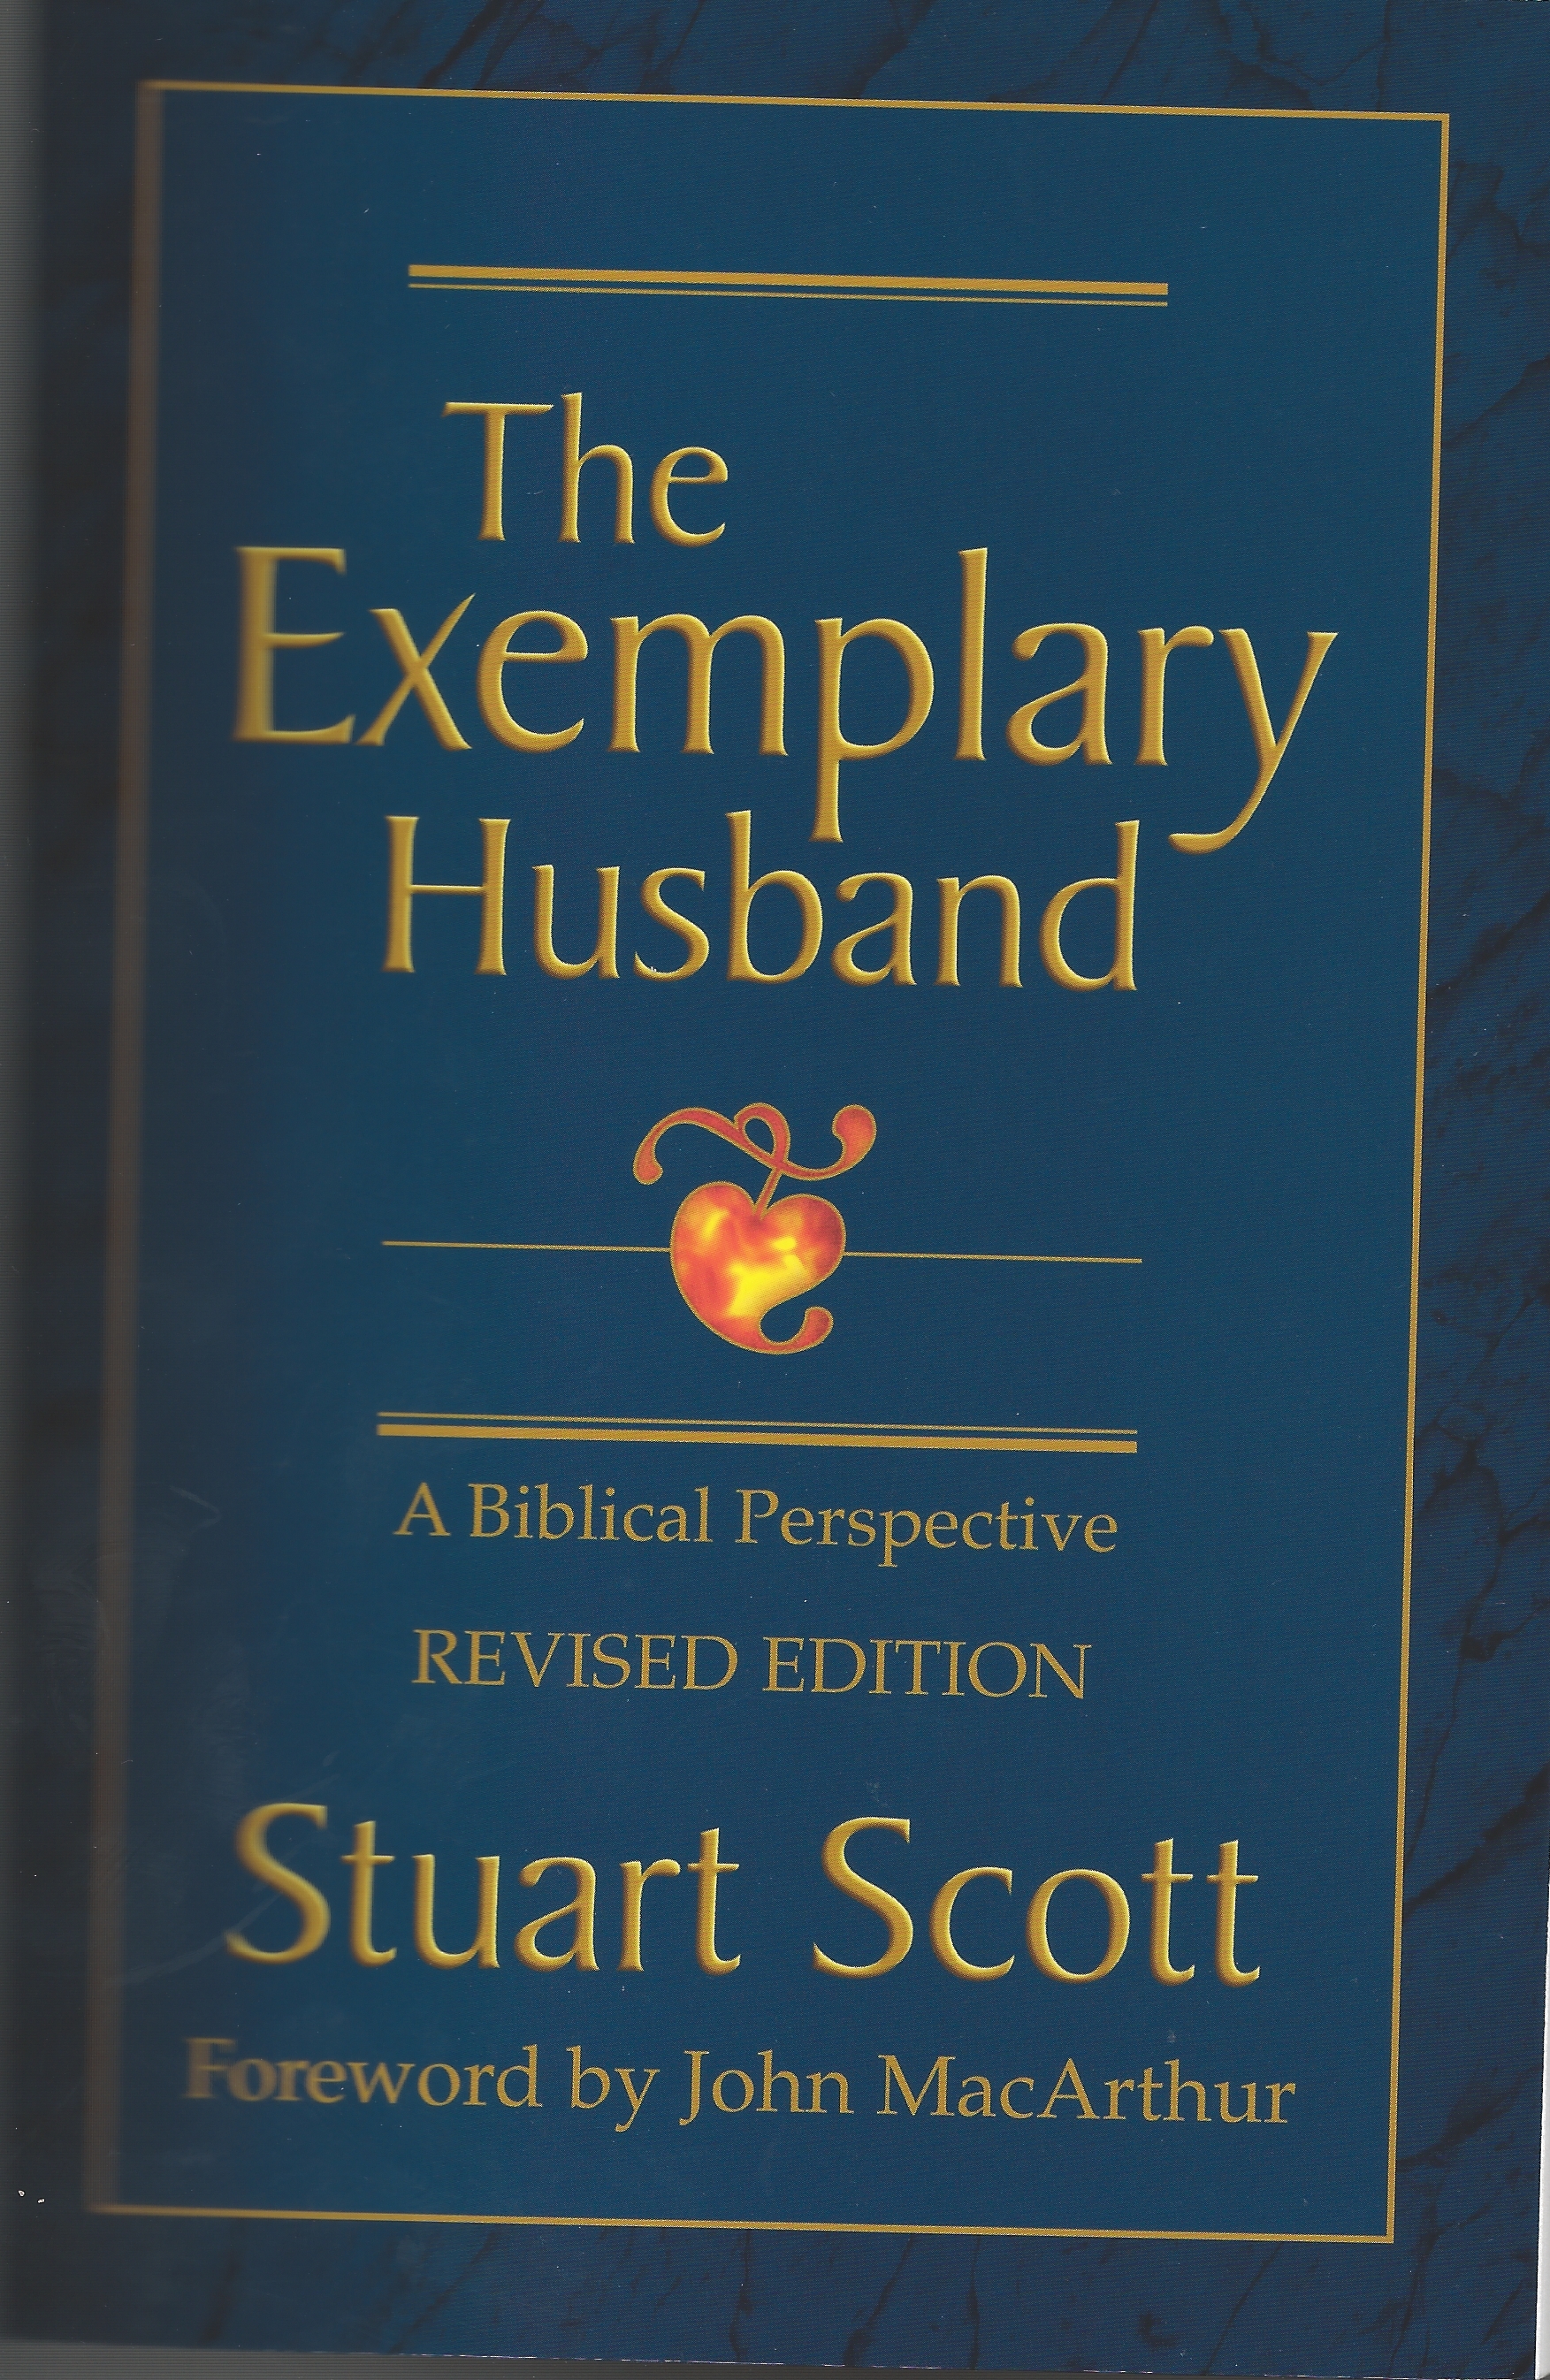 THE EXEMPLARY HUSBAND Stuart Scott